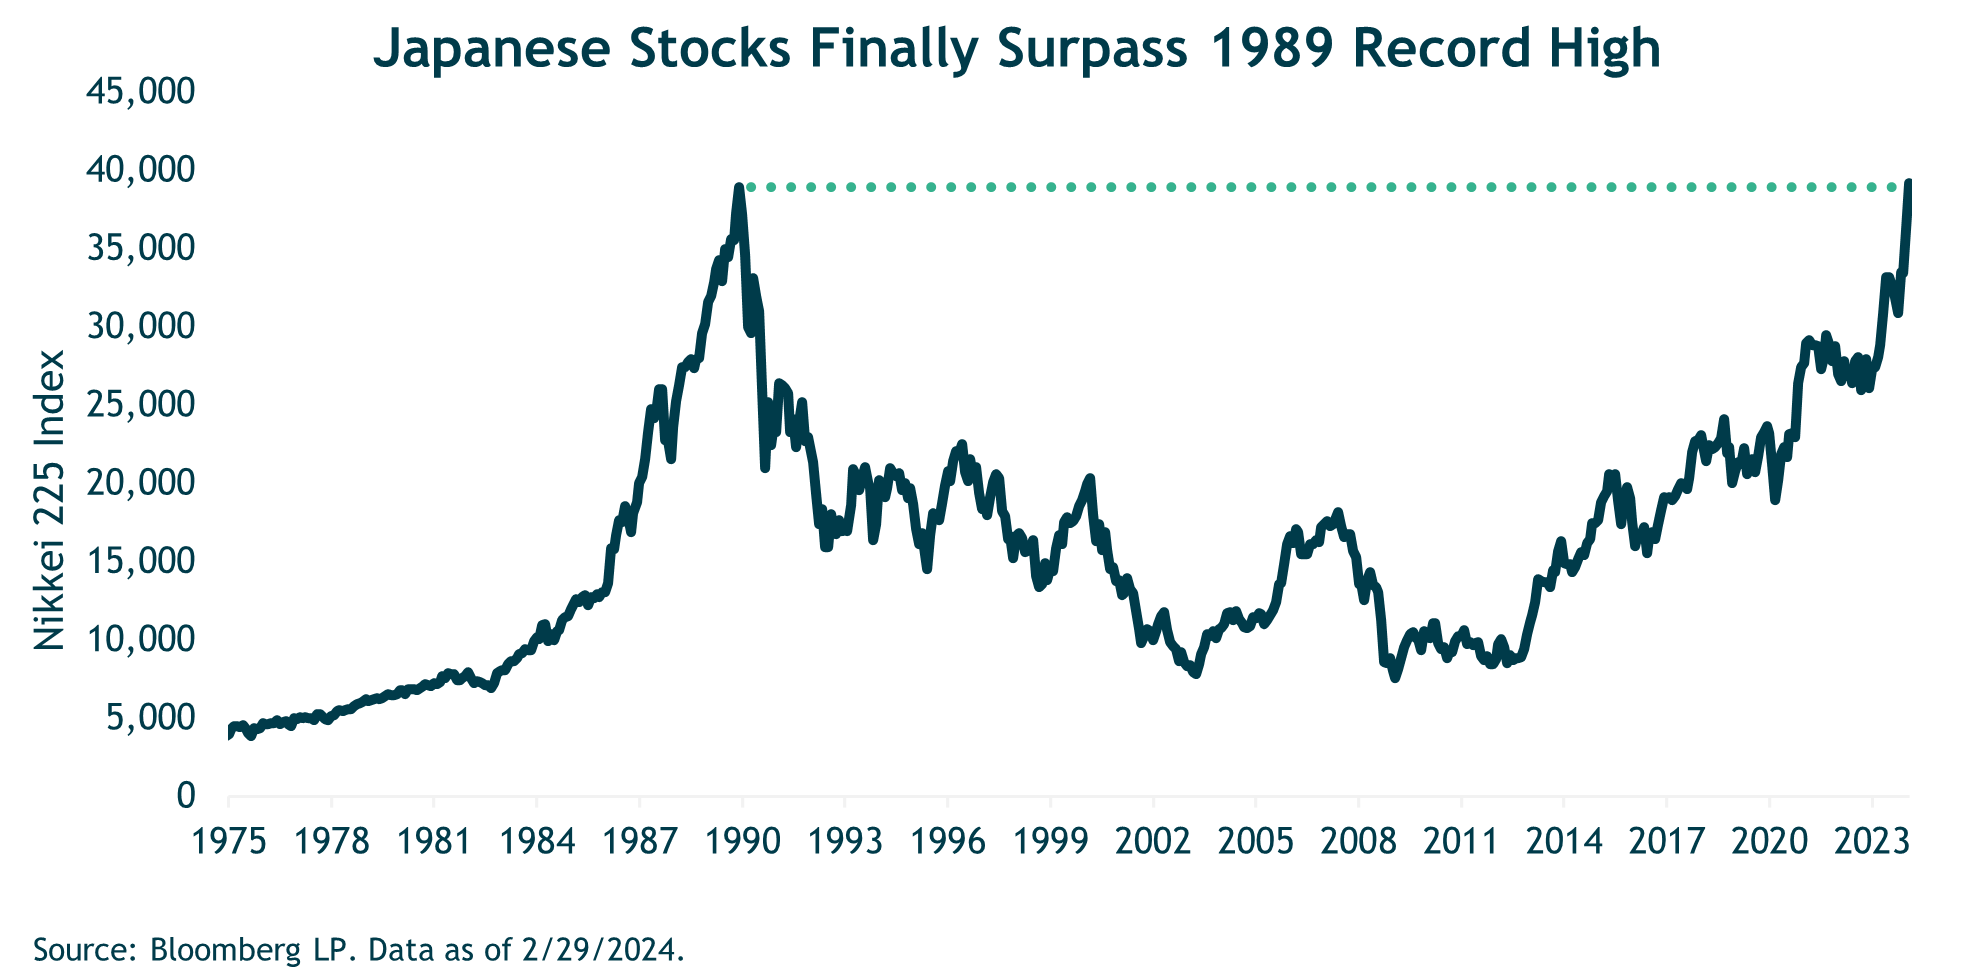 Japanese Stocks